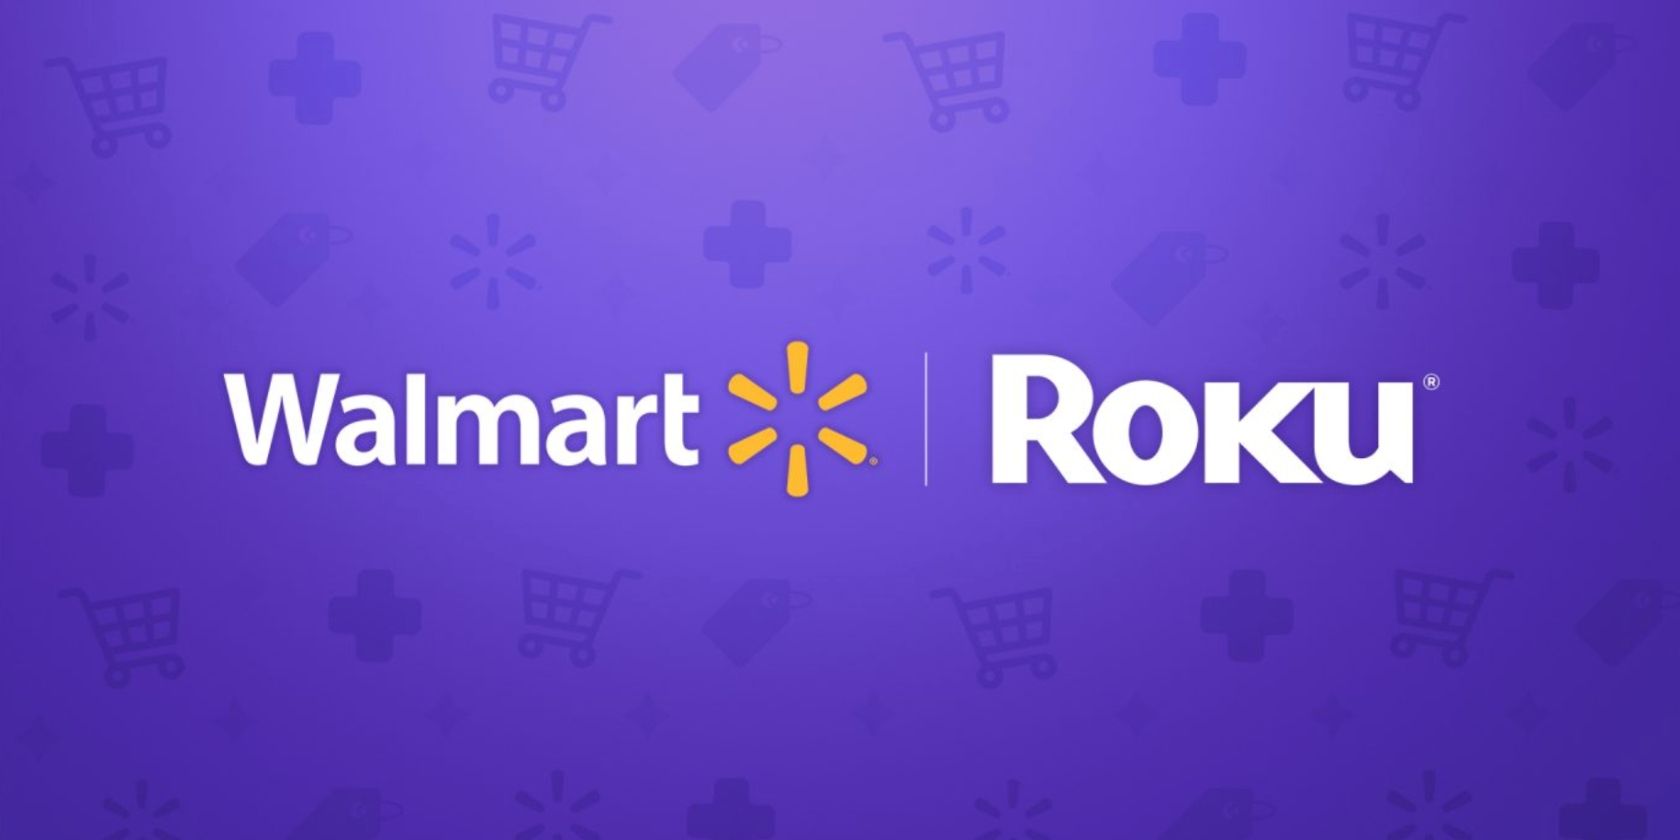 screenshot showing Walmart and Roku logos against purple background